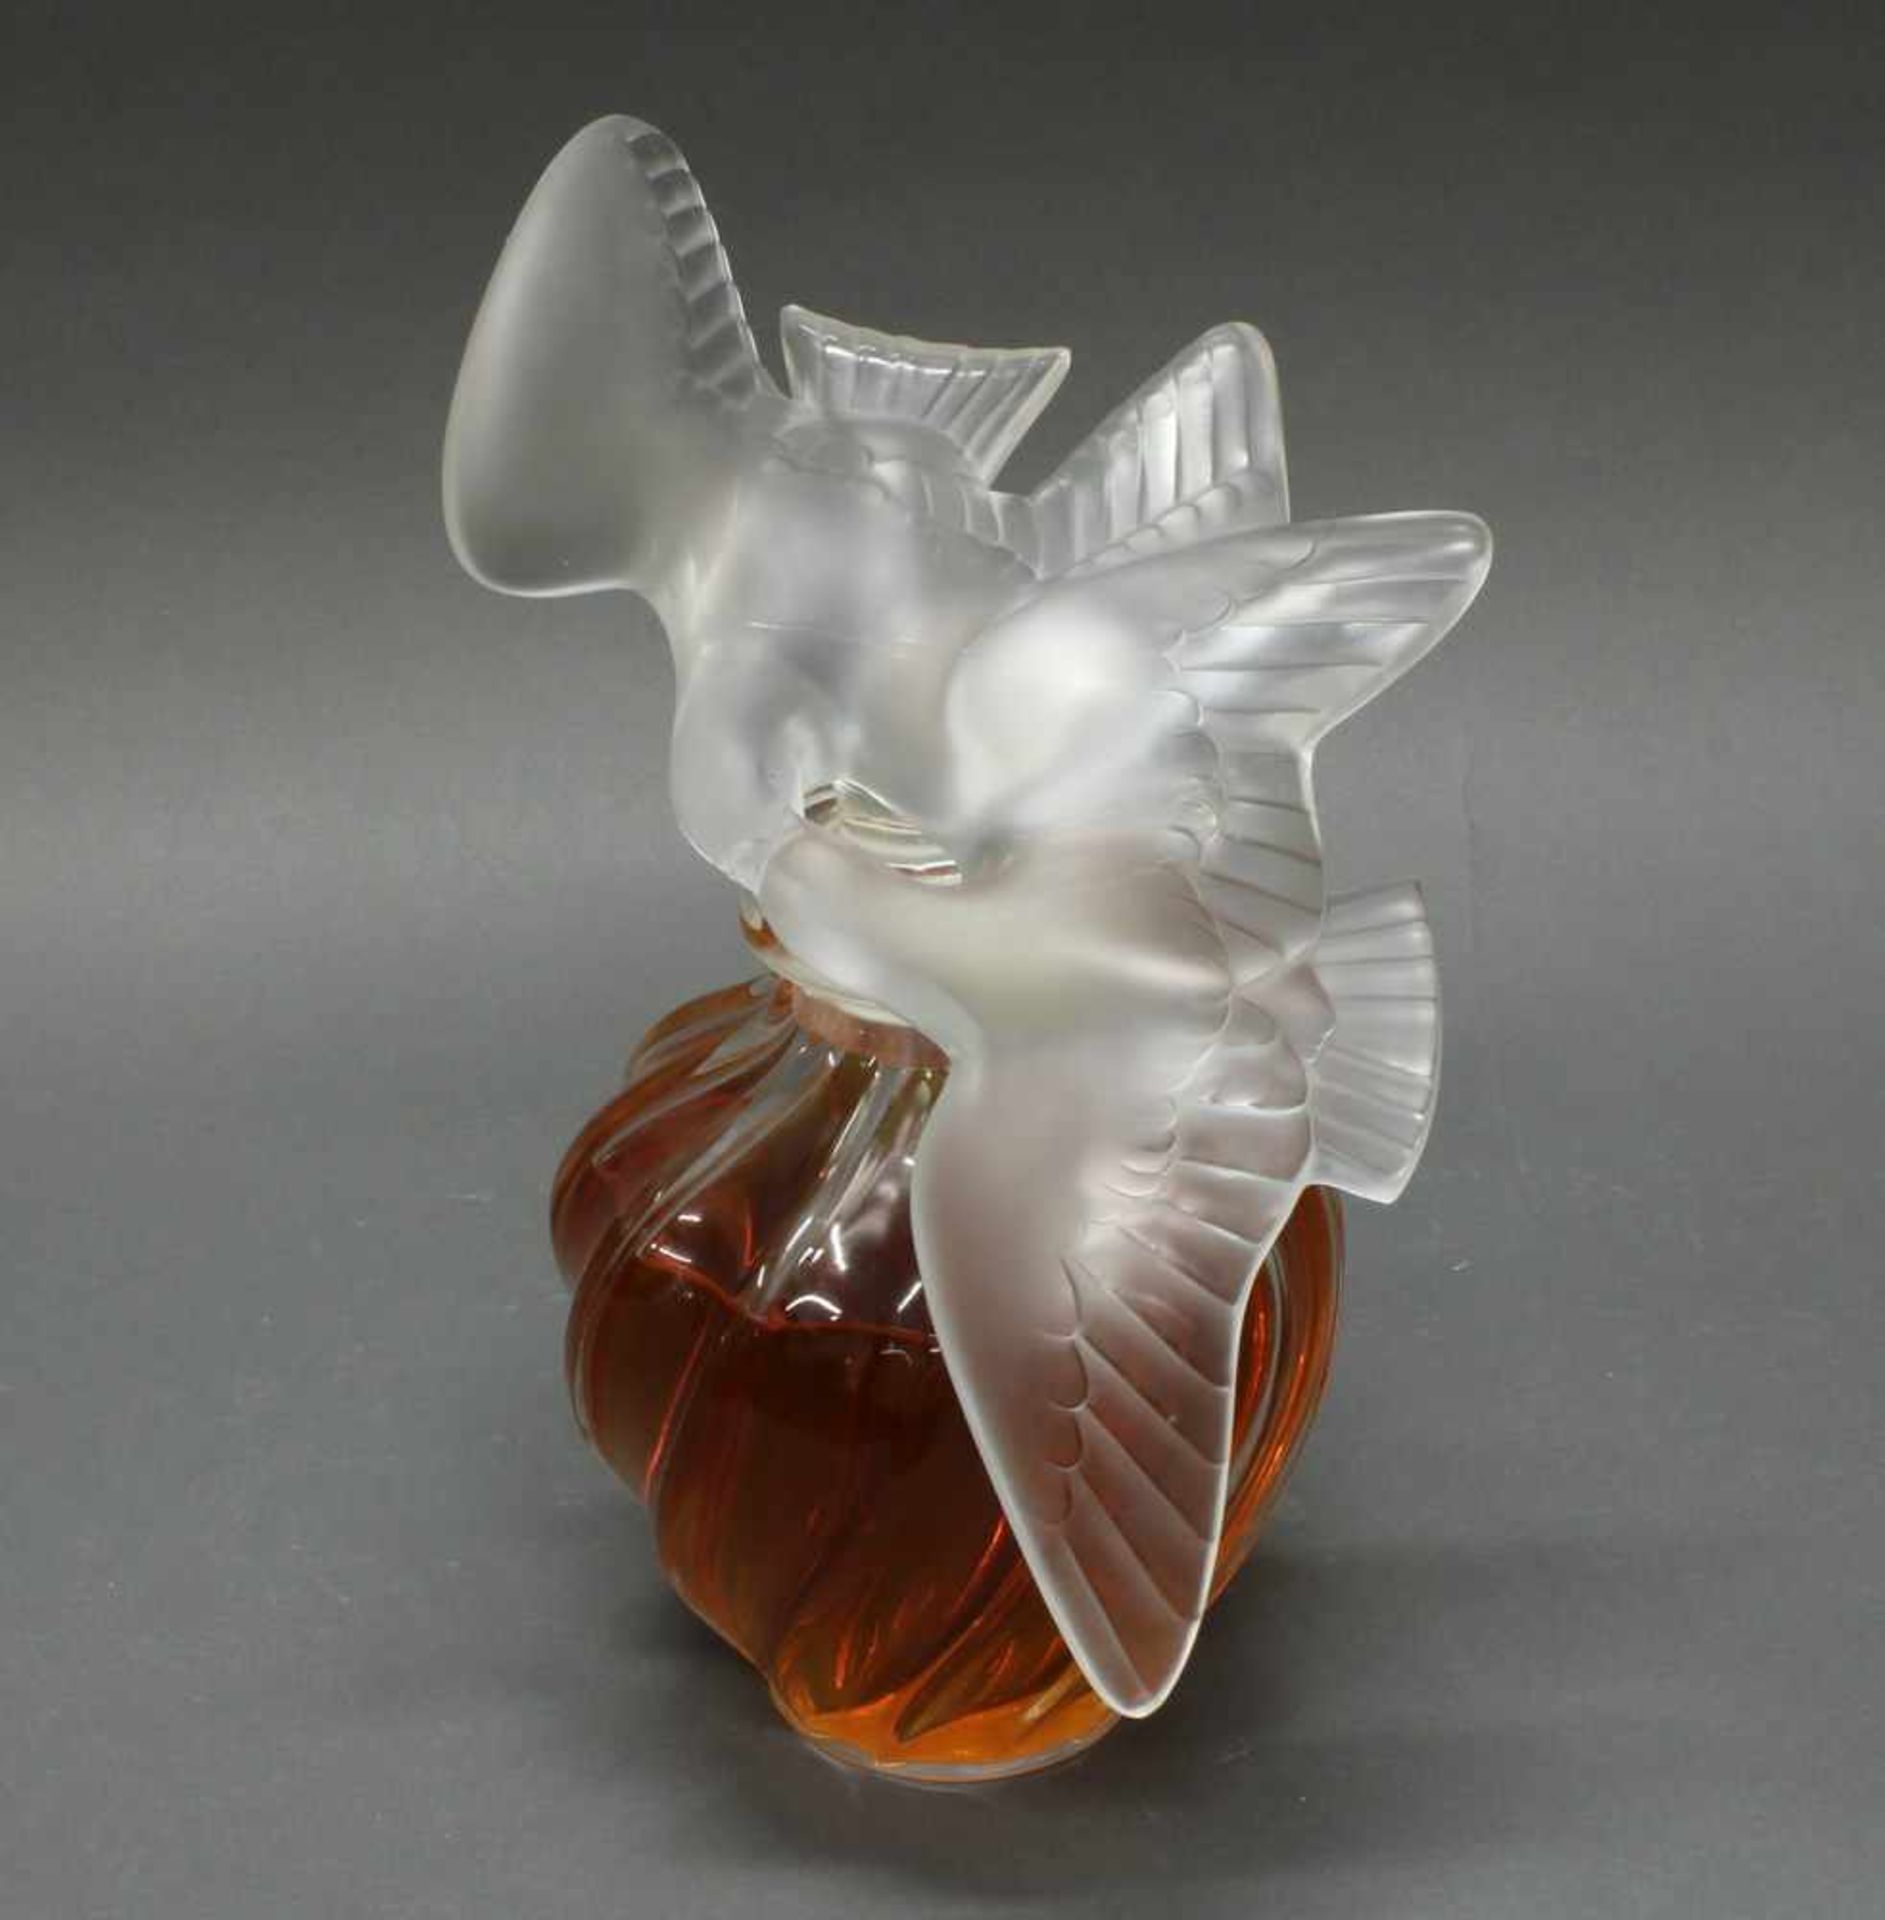 Flakon, "L'Air du Temps", Lalique, farbloses Glas, teils mattiert, Stöpsel mit fliegendem